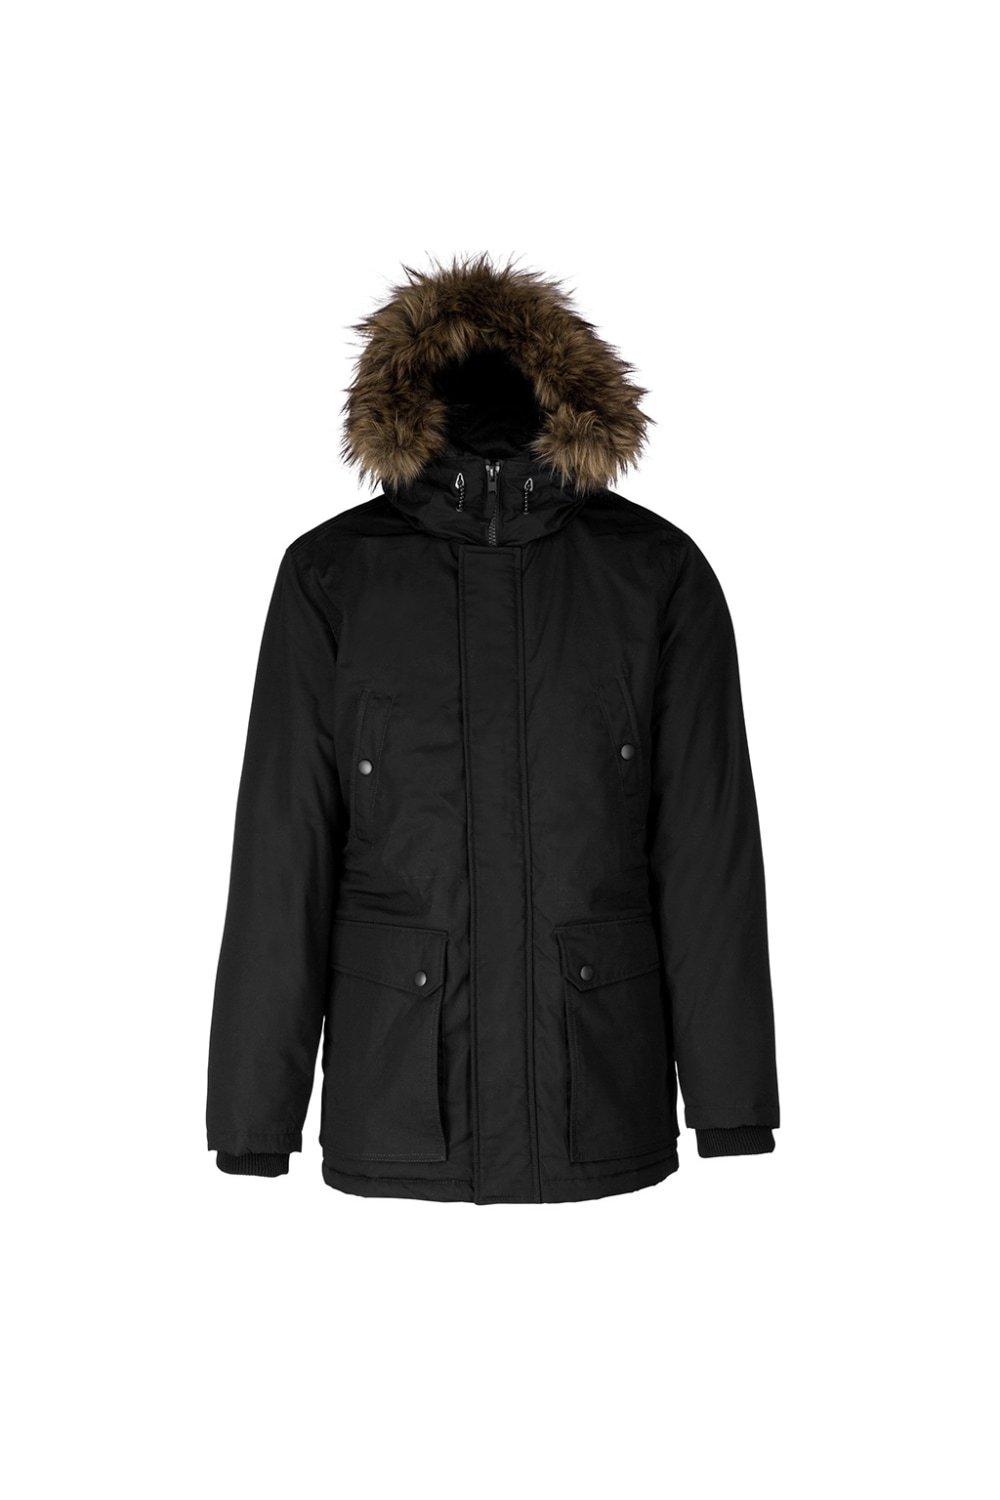 цена Зимняя куртка-парка Kariban, черный